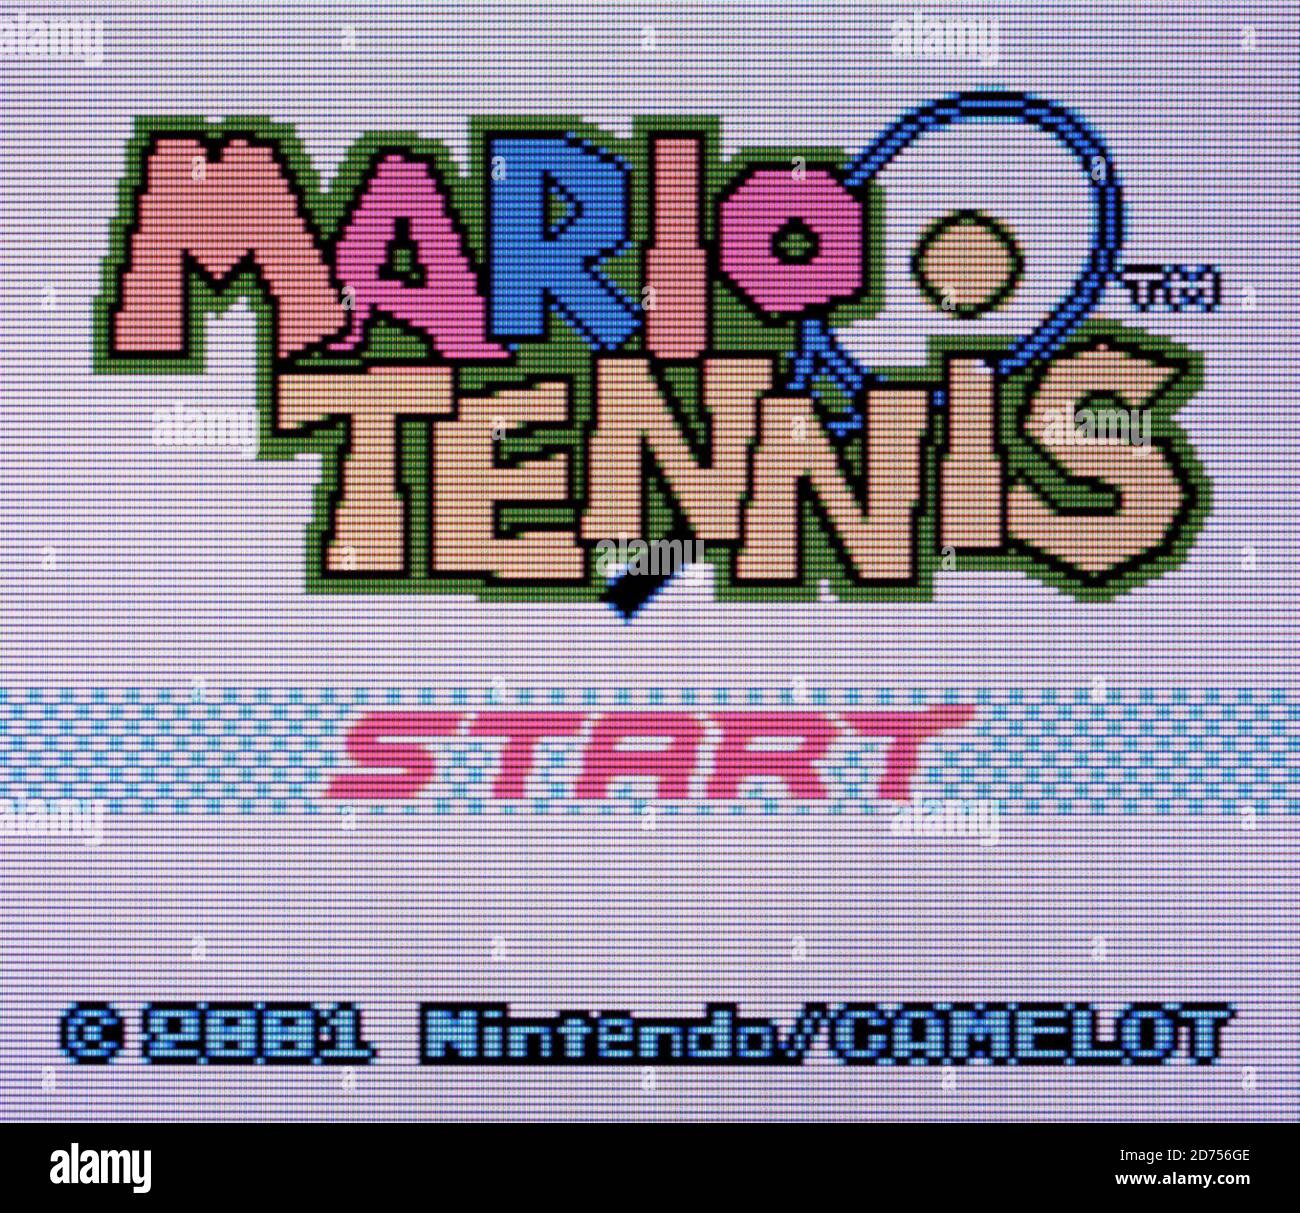 Mario Tennis - Nintendo Game Boy Color Videogame - Editorial usar solo  Fotografía de stock - Alamy